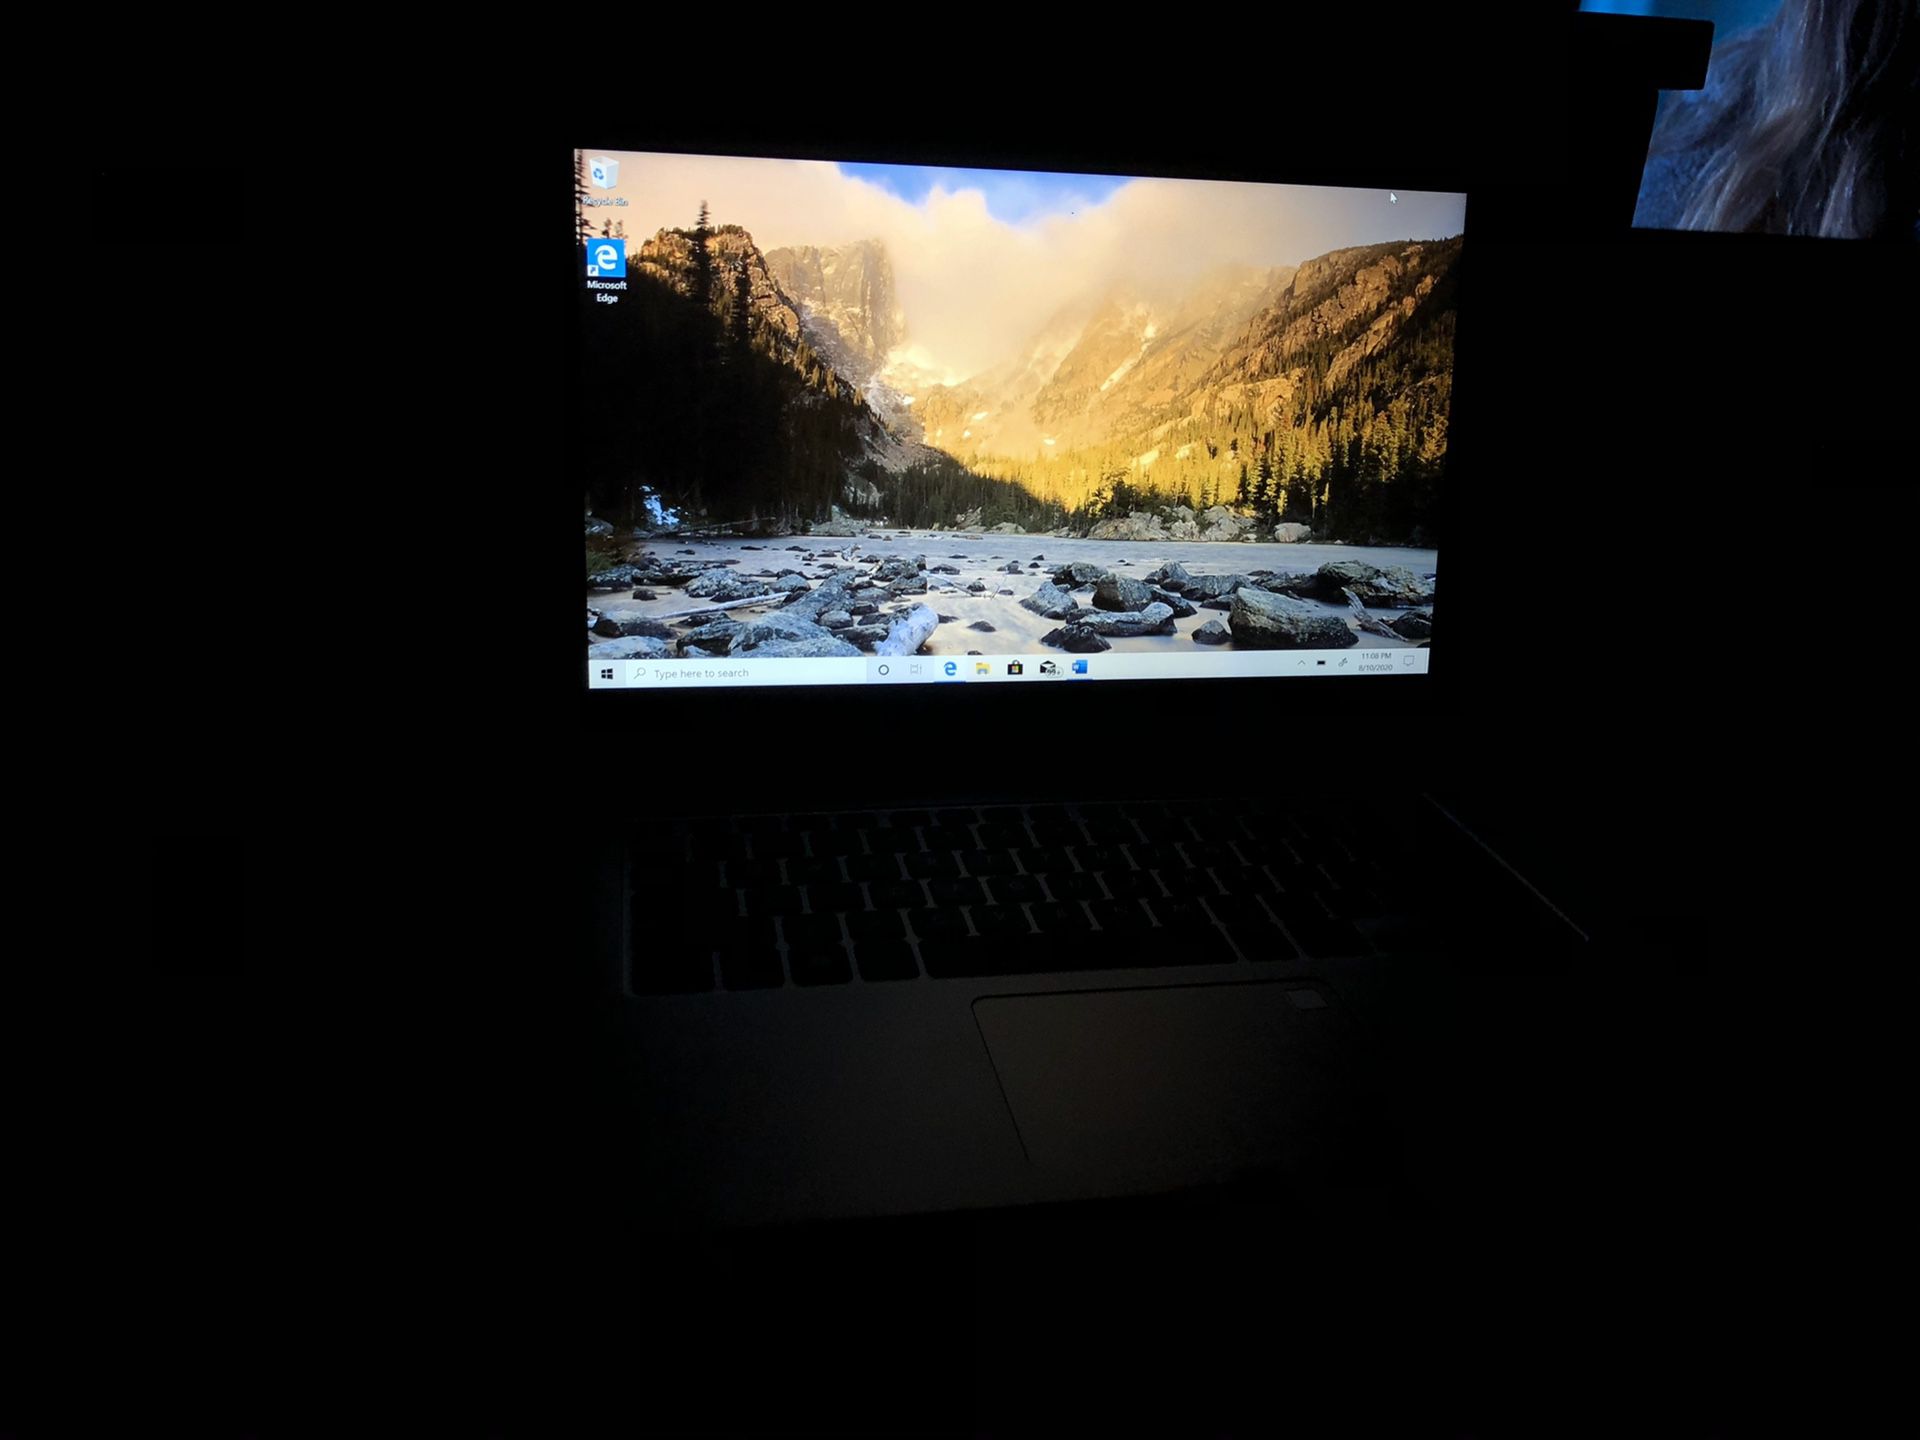 Asus Viviobook flip 2 in 1 laptop